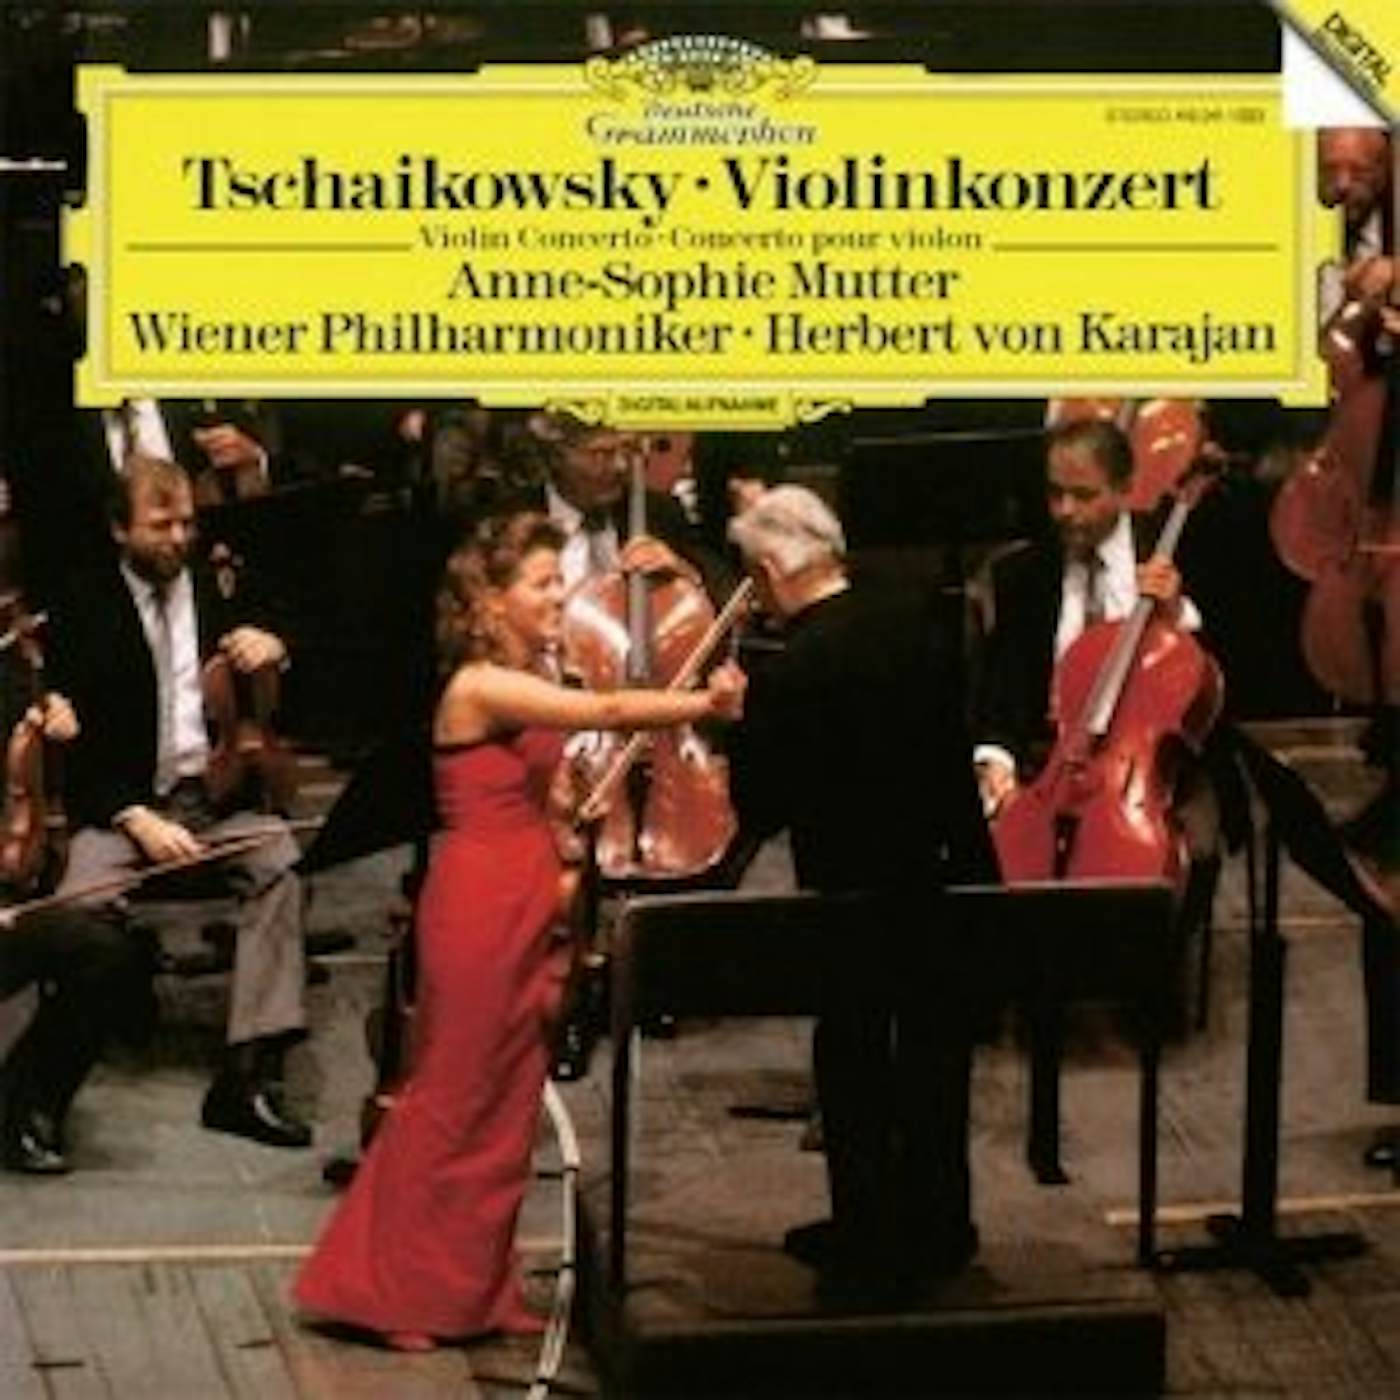 Anne-Sophie Mutter Tchaikovsky: Violin Concerto Vinyl Record